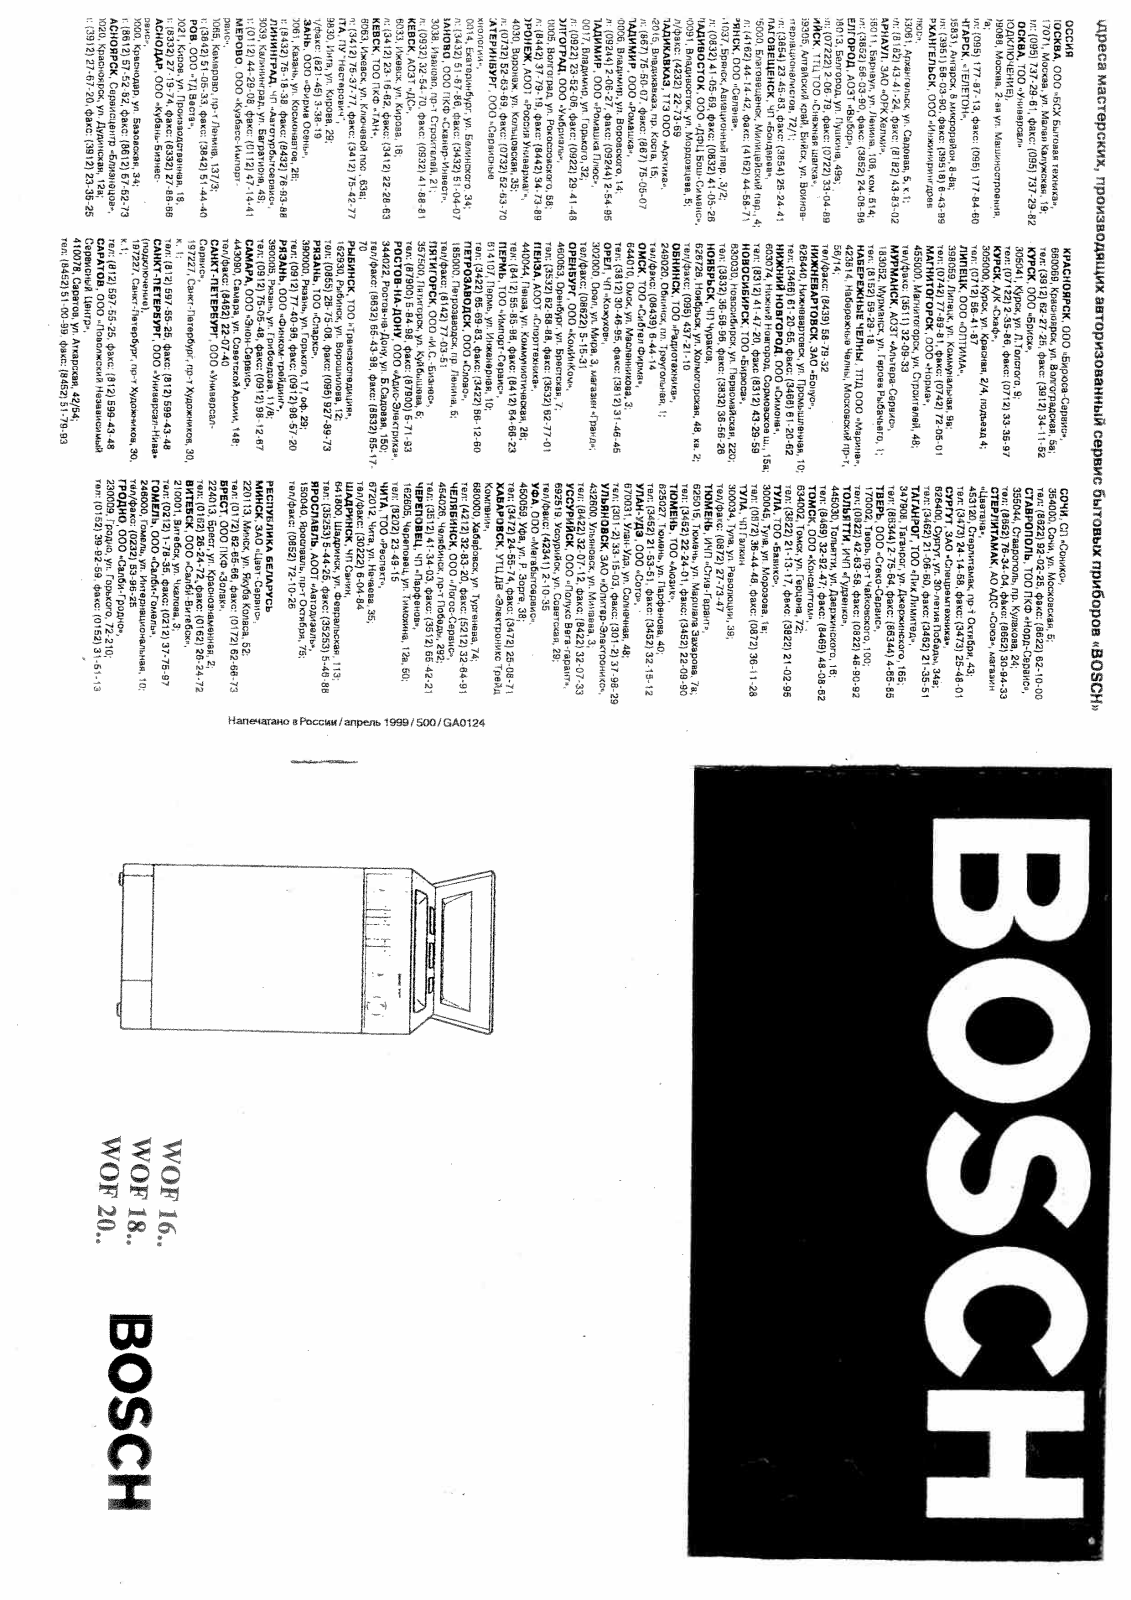 Bosch WOF 2000, WOF 1800 User Manual